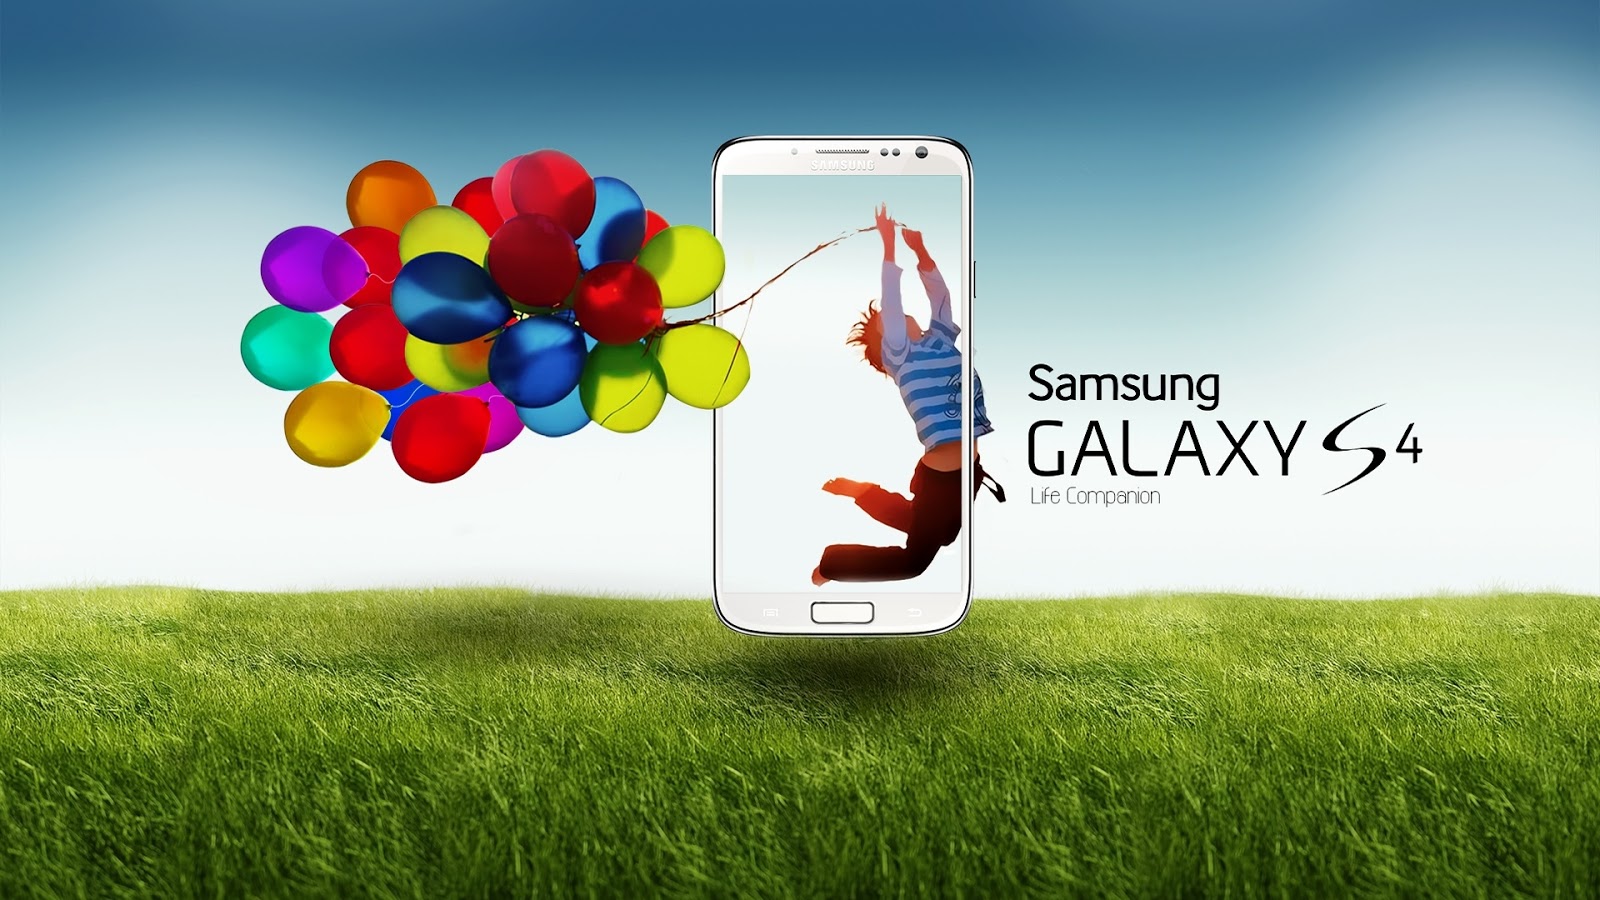 HD Wallpapers: Samsung Galaxy S4 Life Companion